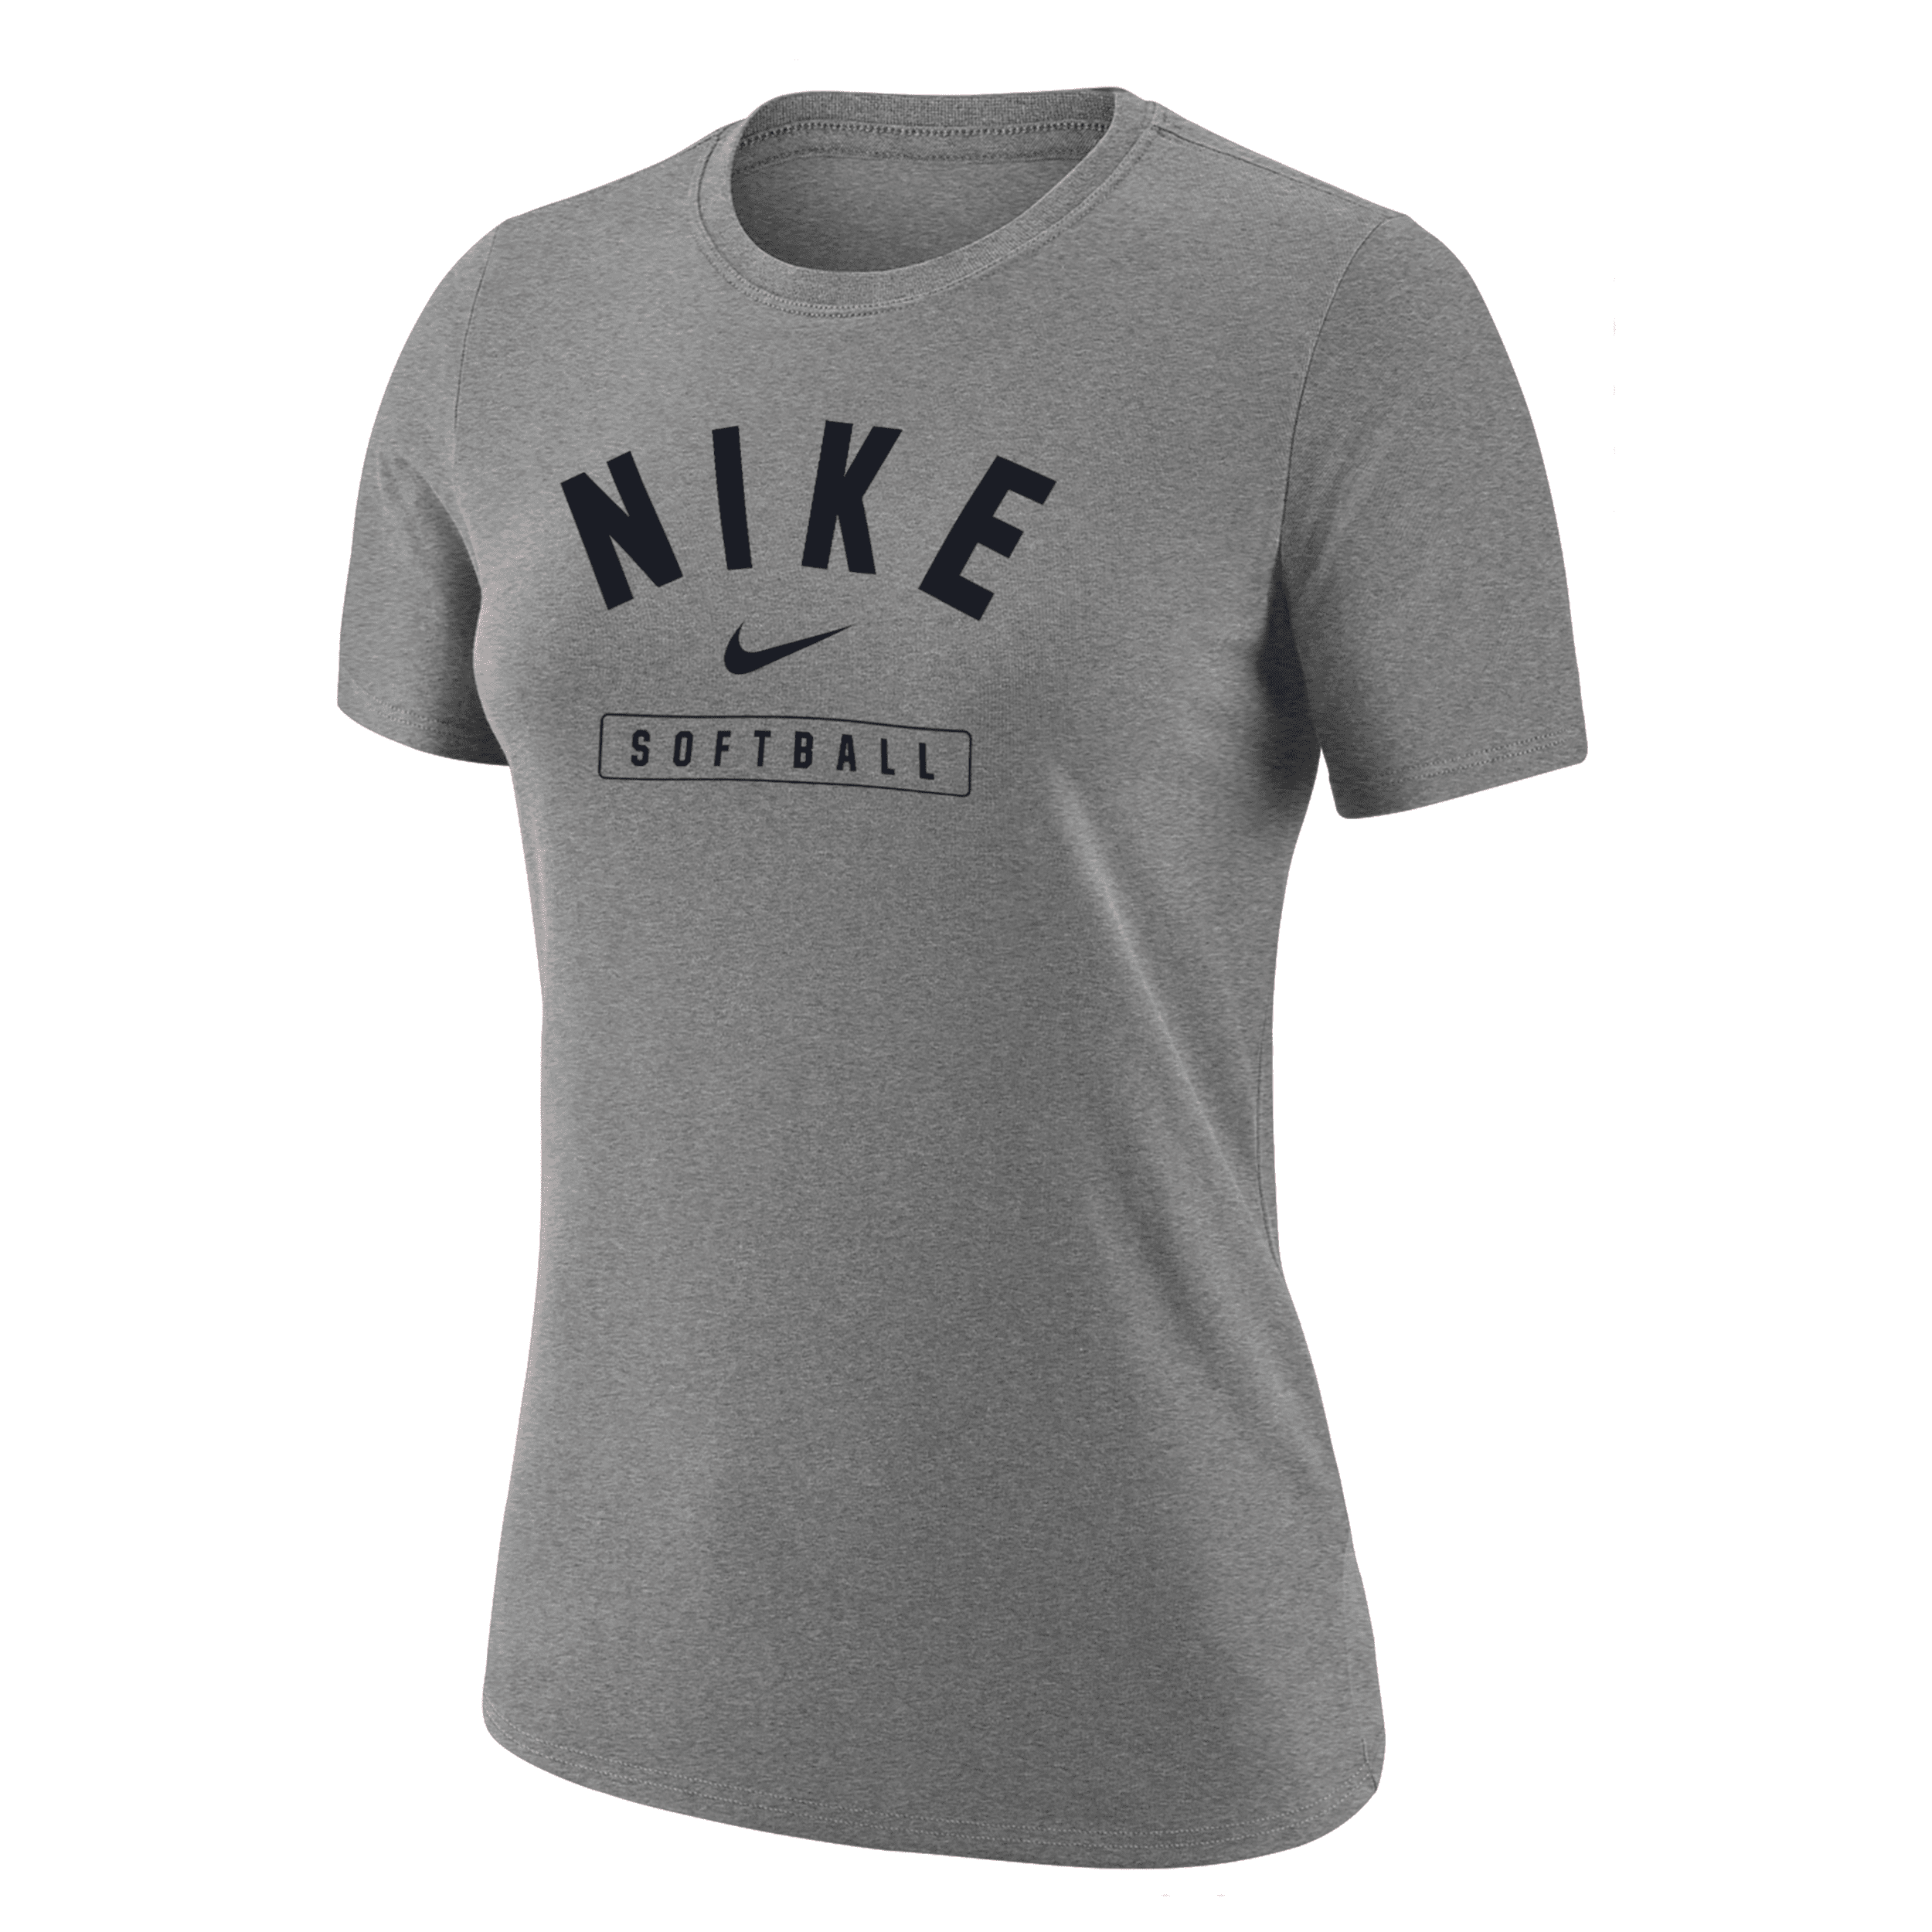 Nike Women's Softball T-shirt In Grey